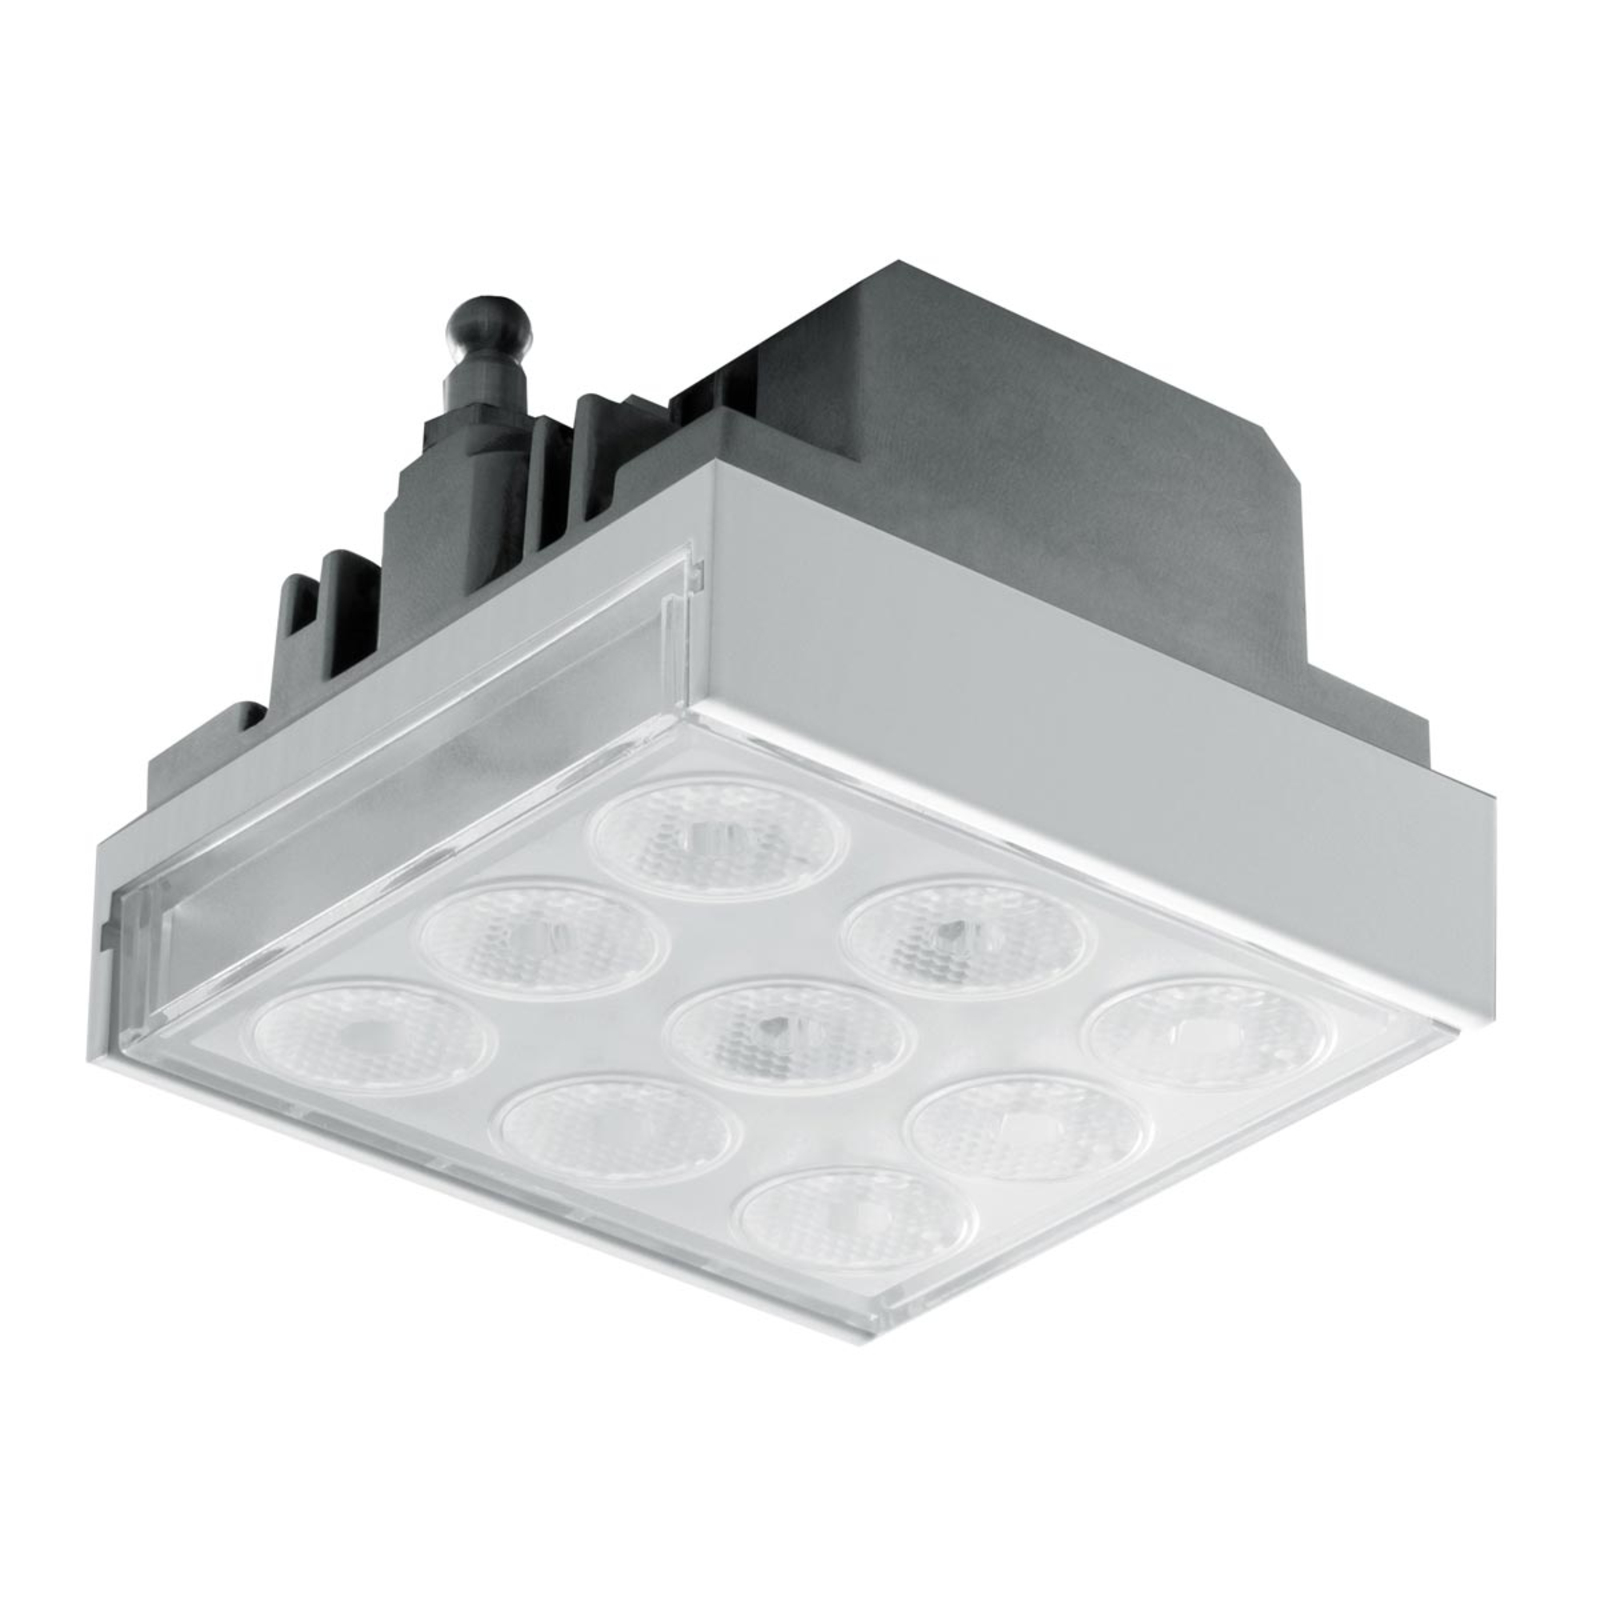 Lampa sufitowa LED PAD80 z regulowaną soczewką